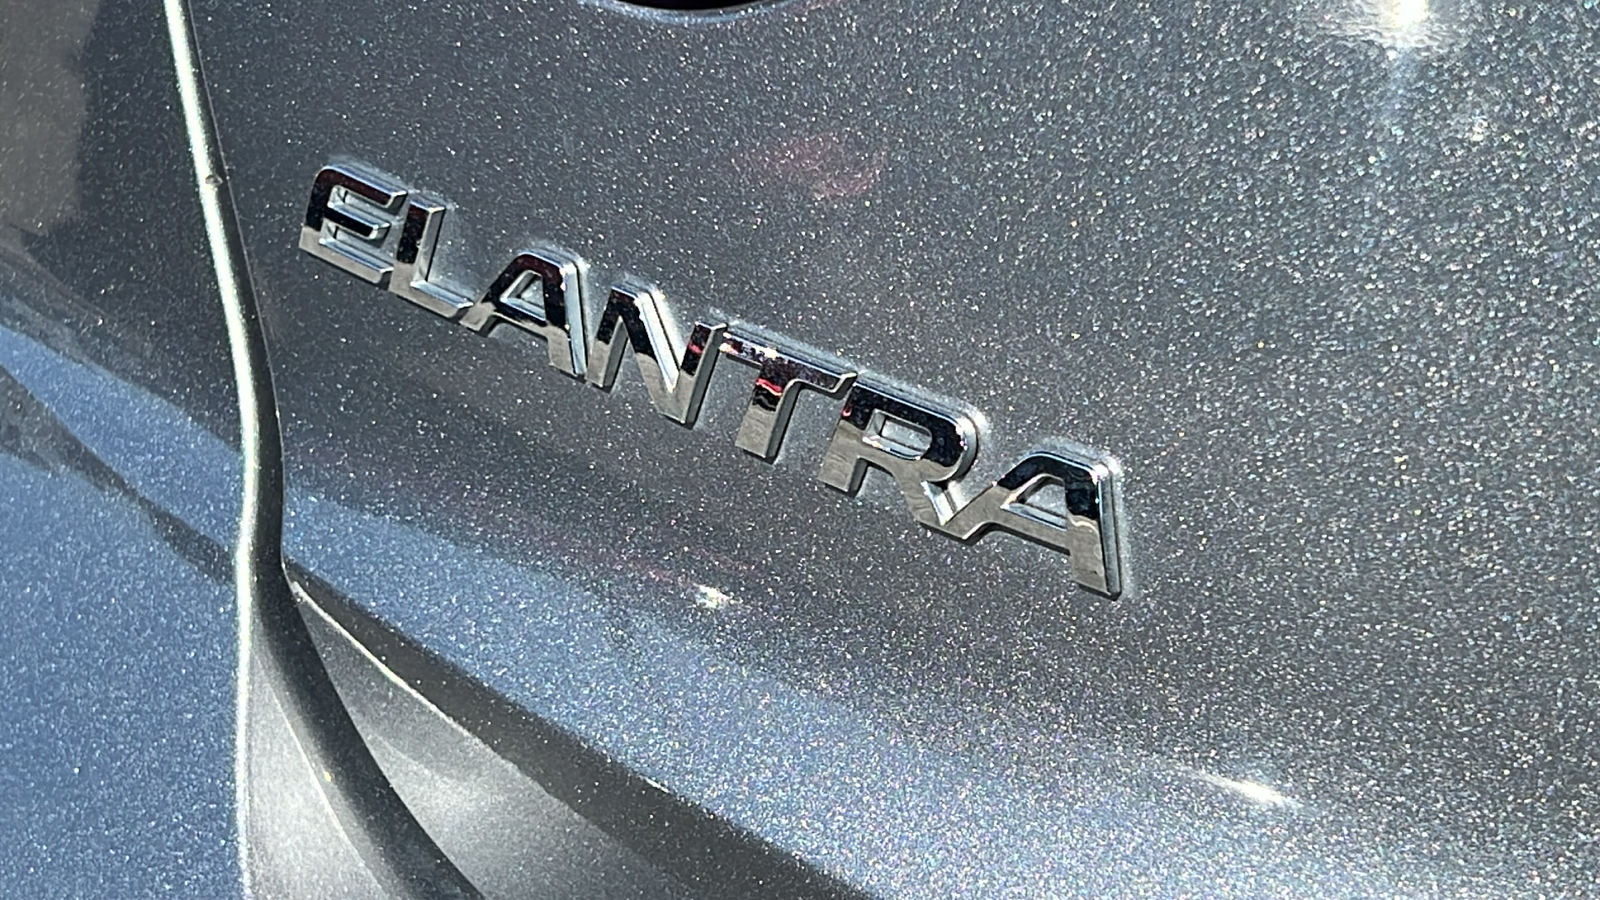 2018 Hyundai Elantra Value Edition 7